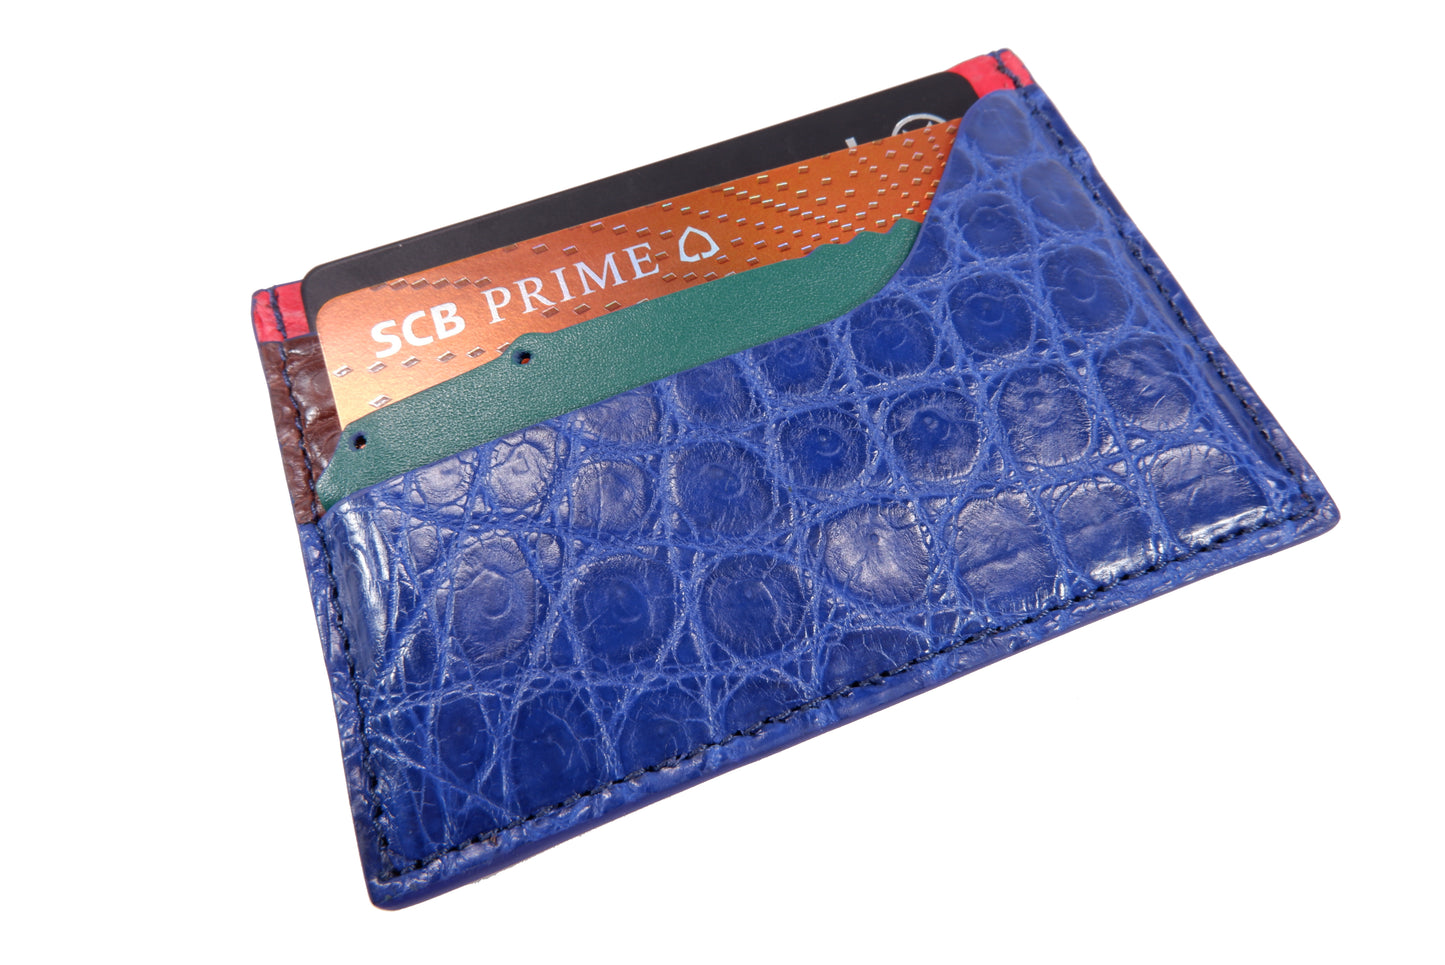 Genuine Crocodile Skin Leather Slim Business & Credit Card Holder Sleeve Wallet with Crocodile Design